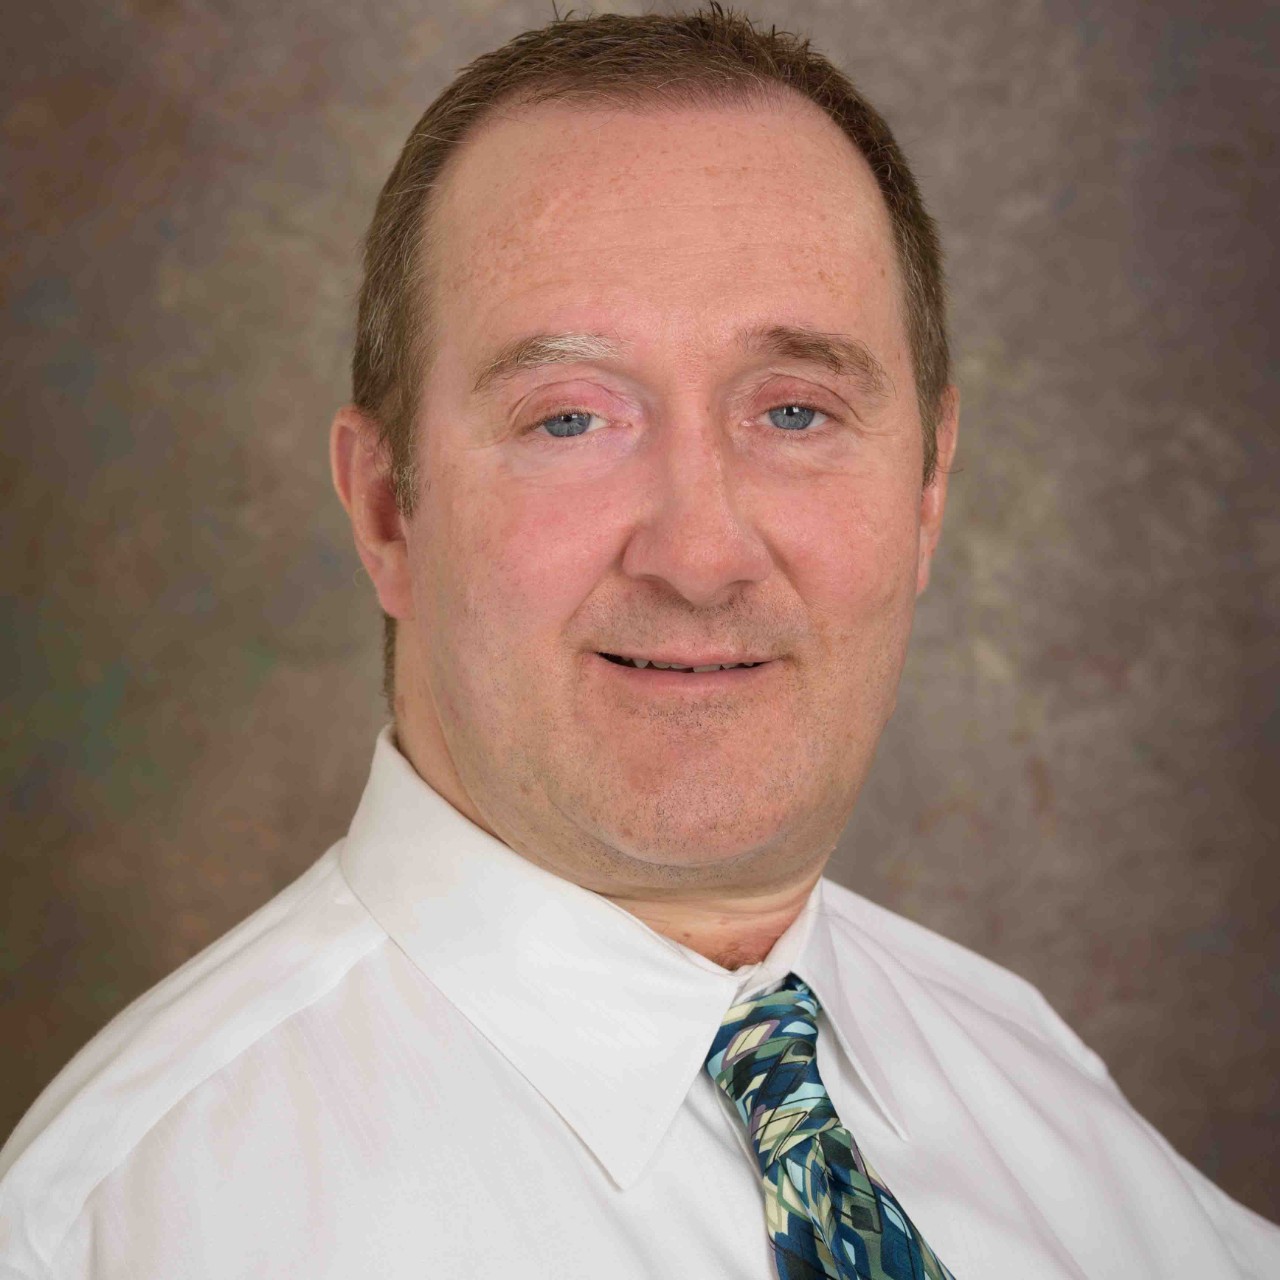 2015 publicity photo of Ken Barner, chairperson of Electrical & Computer Engineering (ECE). - (Evan Krape / University of Delaware)